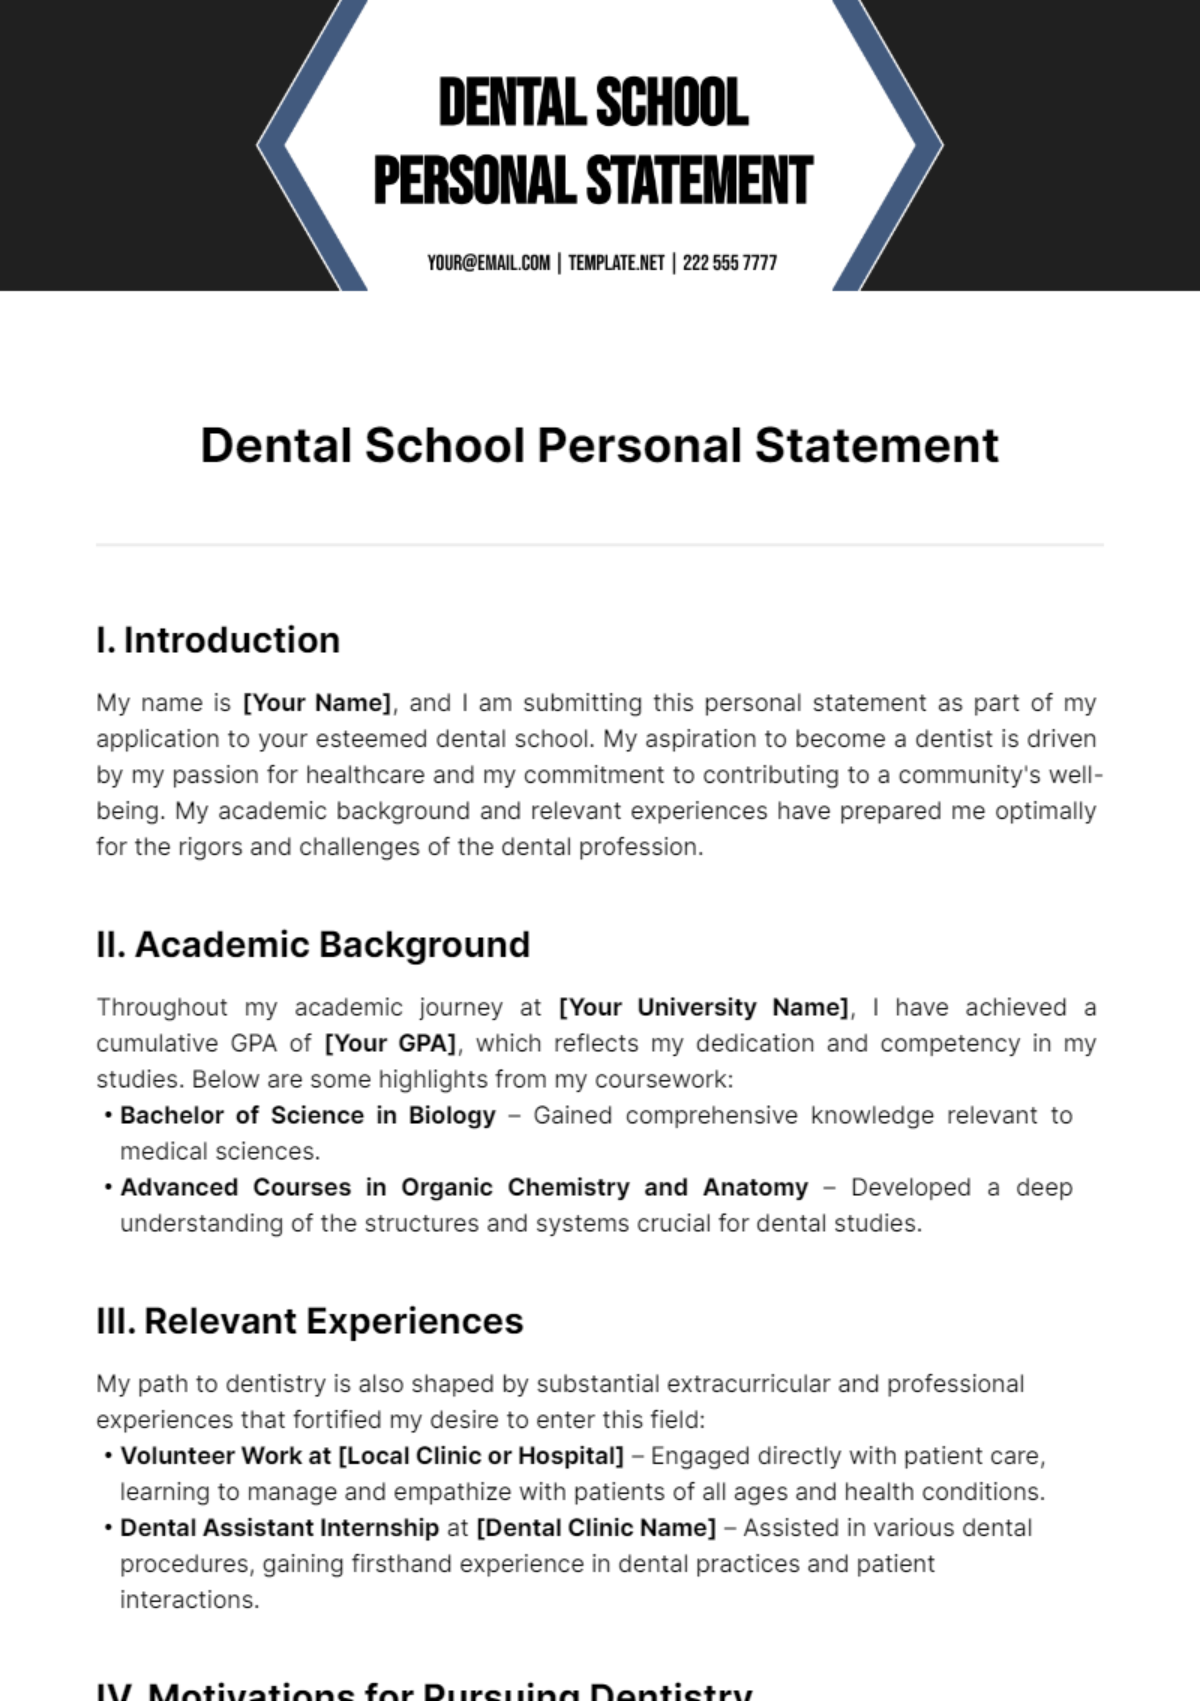 Dental School Personal Statement Template